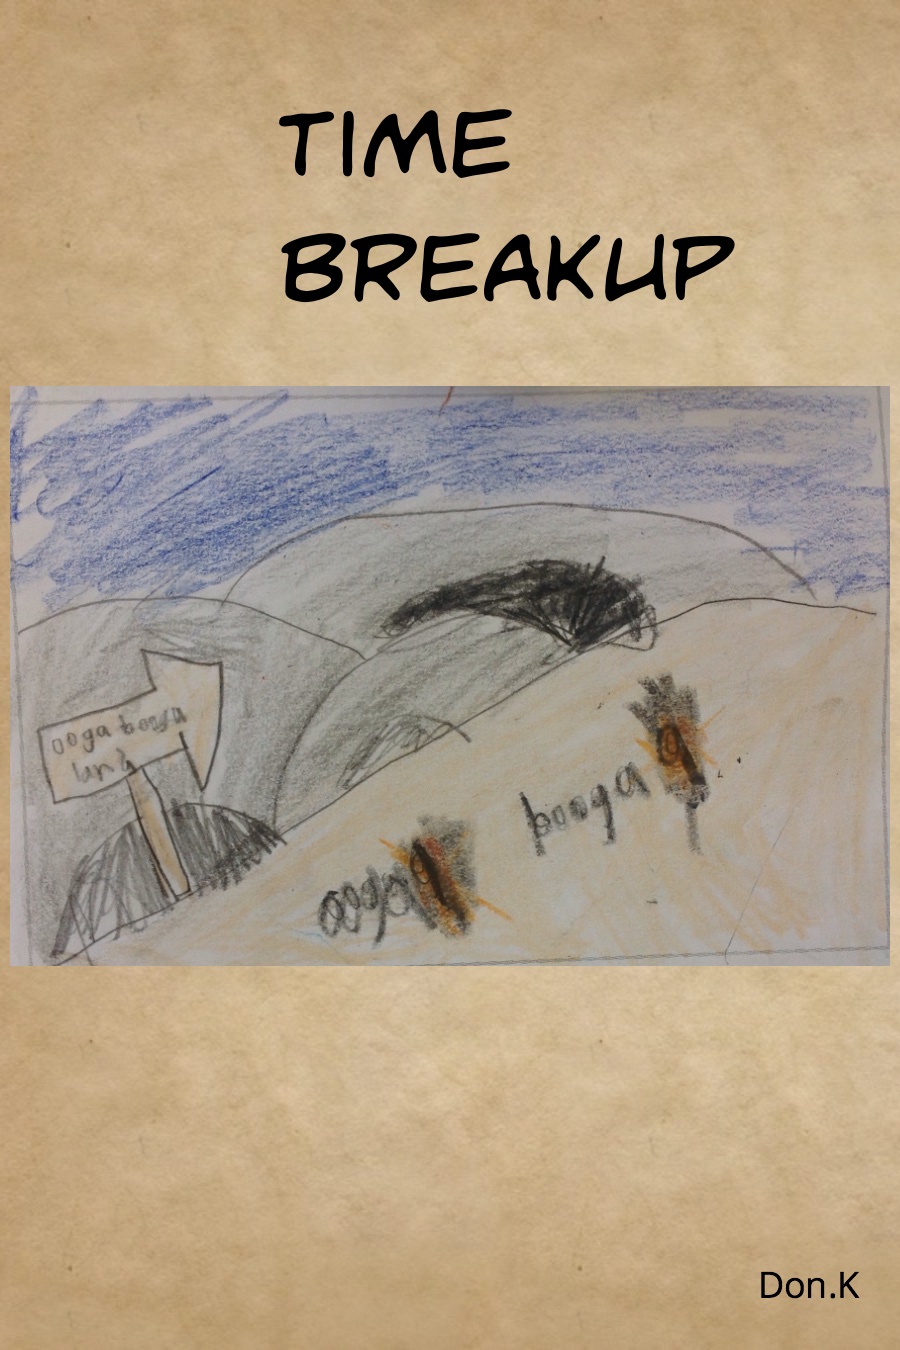 Time Breakup by Don K